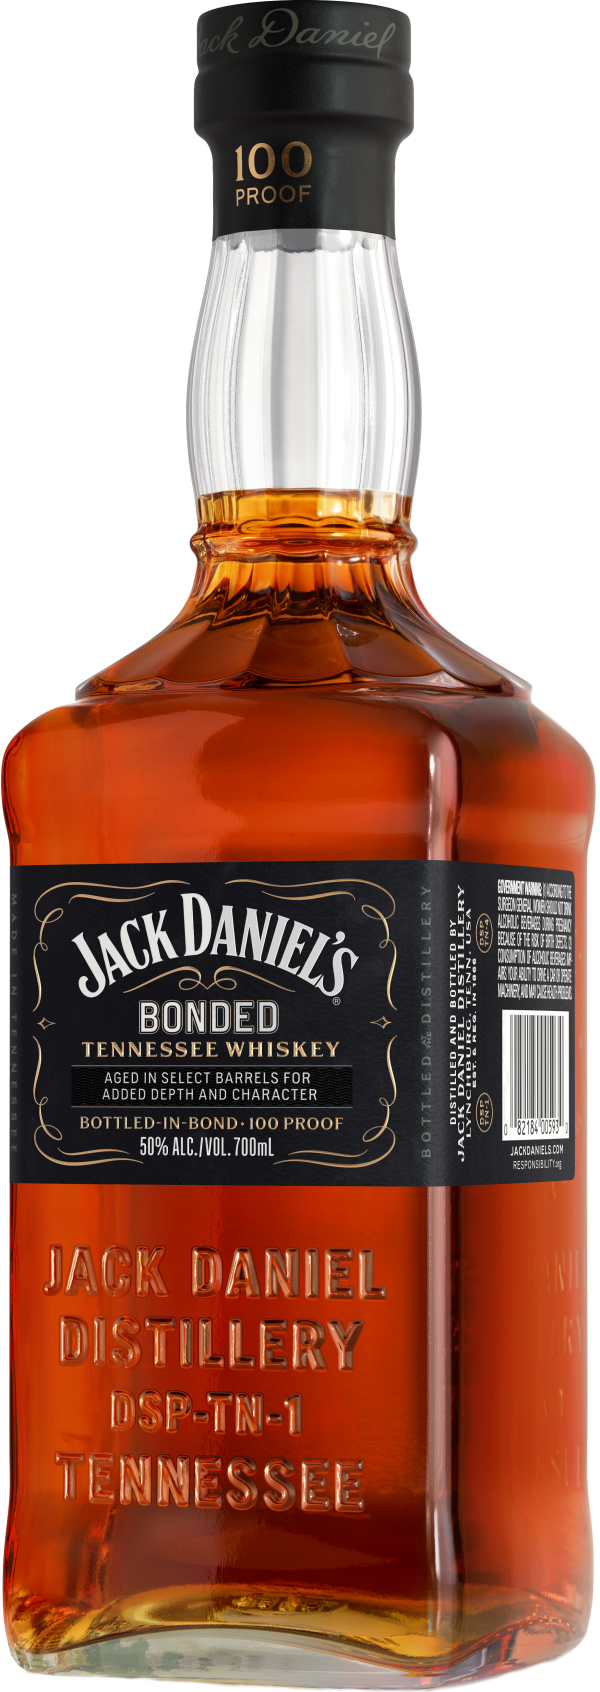 https://www.bottlebuys.com/images/sites/bottlebuys/labels/jack-daniel-s-bonded-tennessee-whiskey-100-proof-700ml_1.jpg